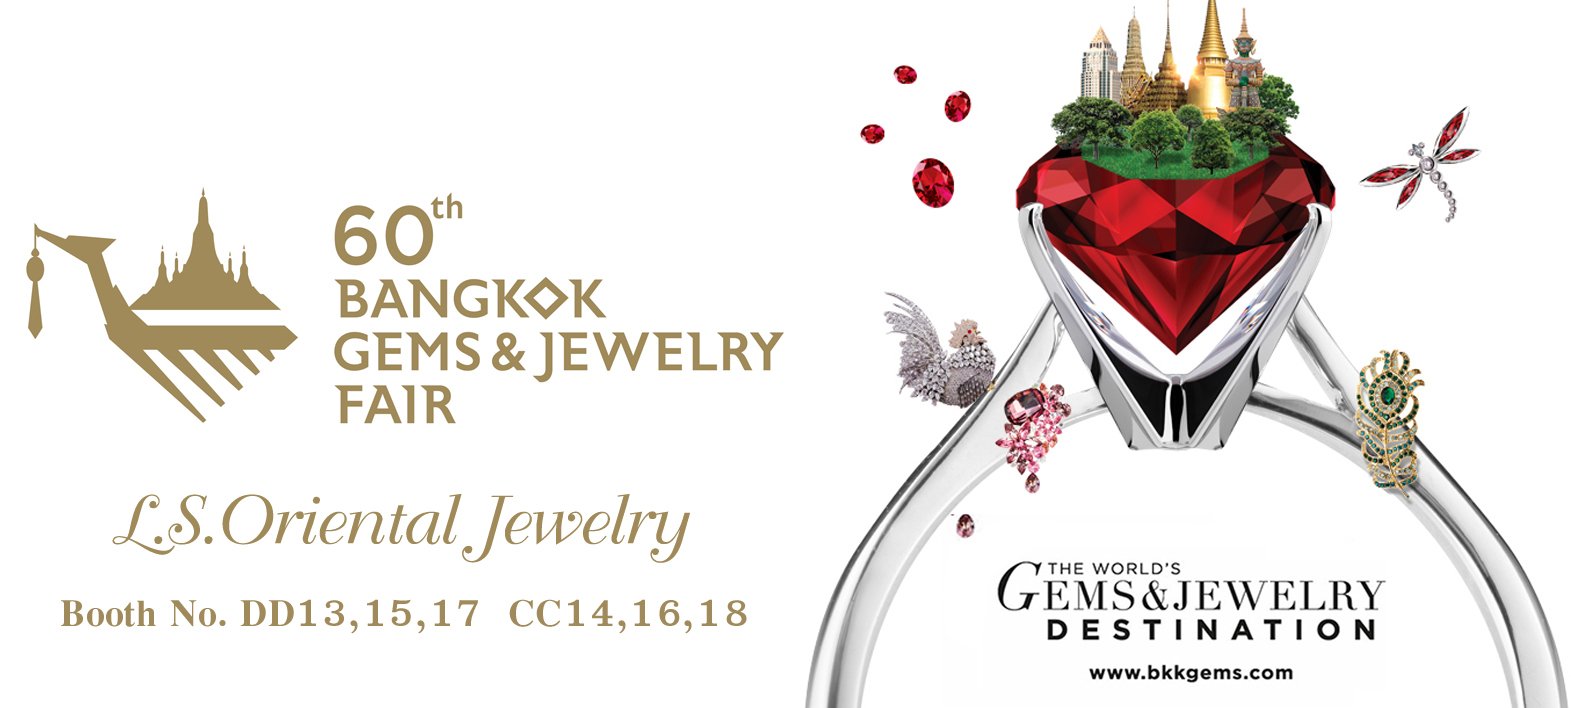 Lee Seng Jewelry (L.S. Oriental Jewelry , L.S. Jewelry Group) เข้าร่วมจัดงานแสดงเพชร และอัญมณีที่ใหญ่ที่สุด Bangkok Gems & Jewelry Fair ครั้งที่ 60